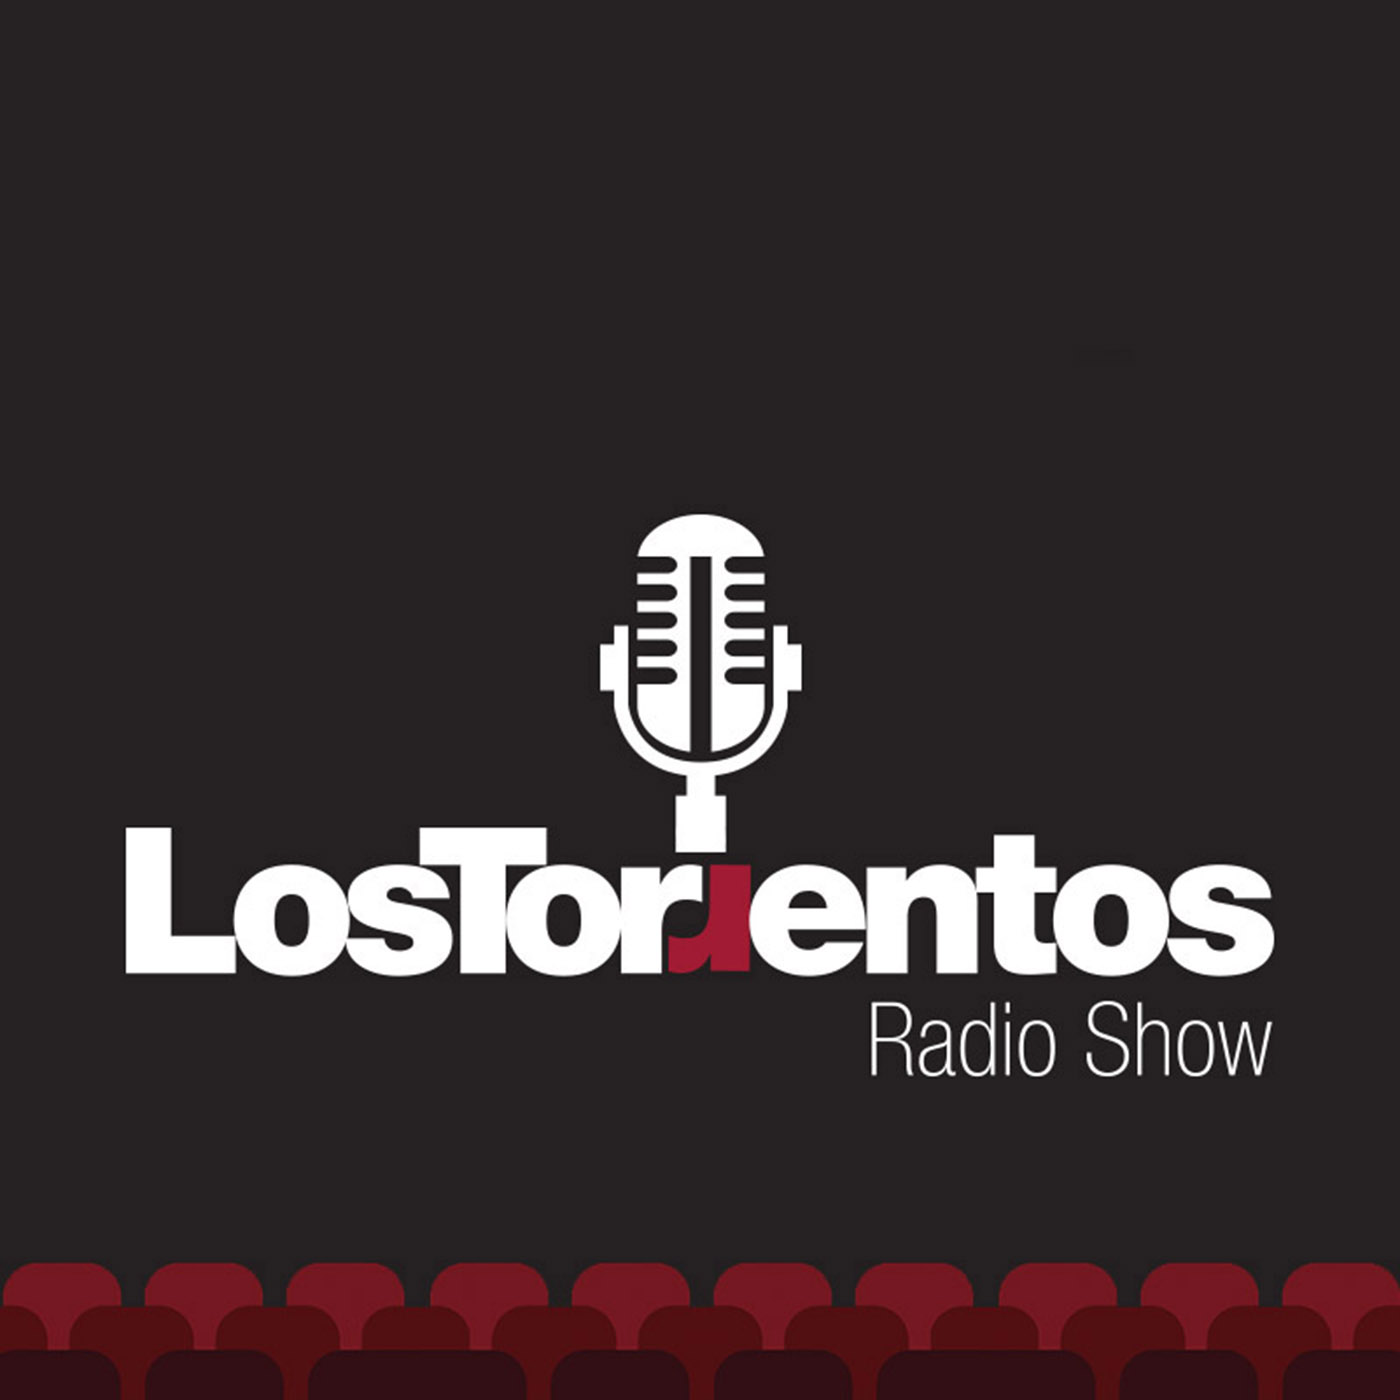 Lostorrentos radio show